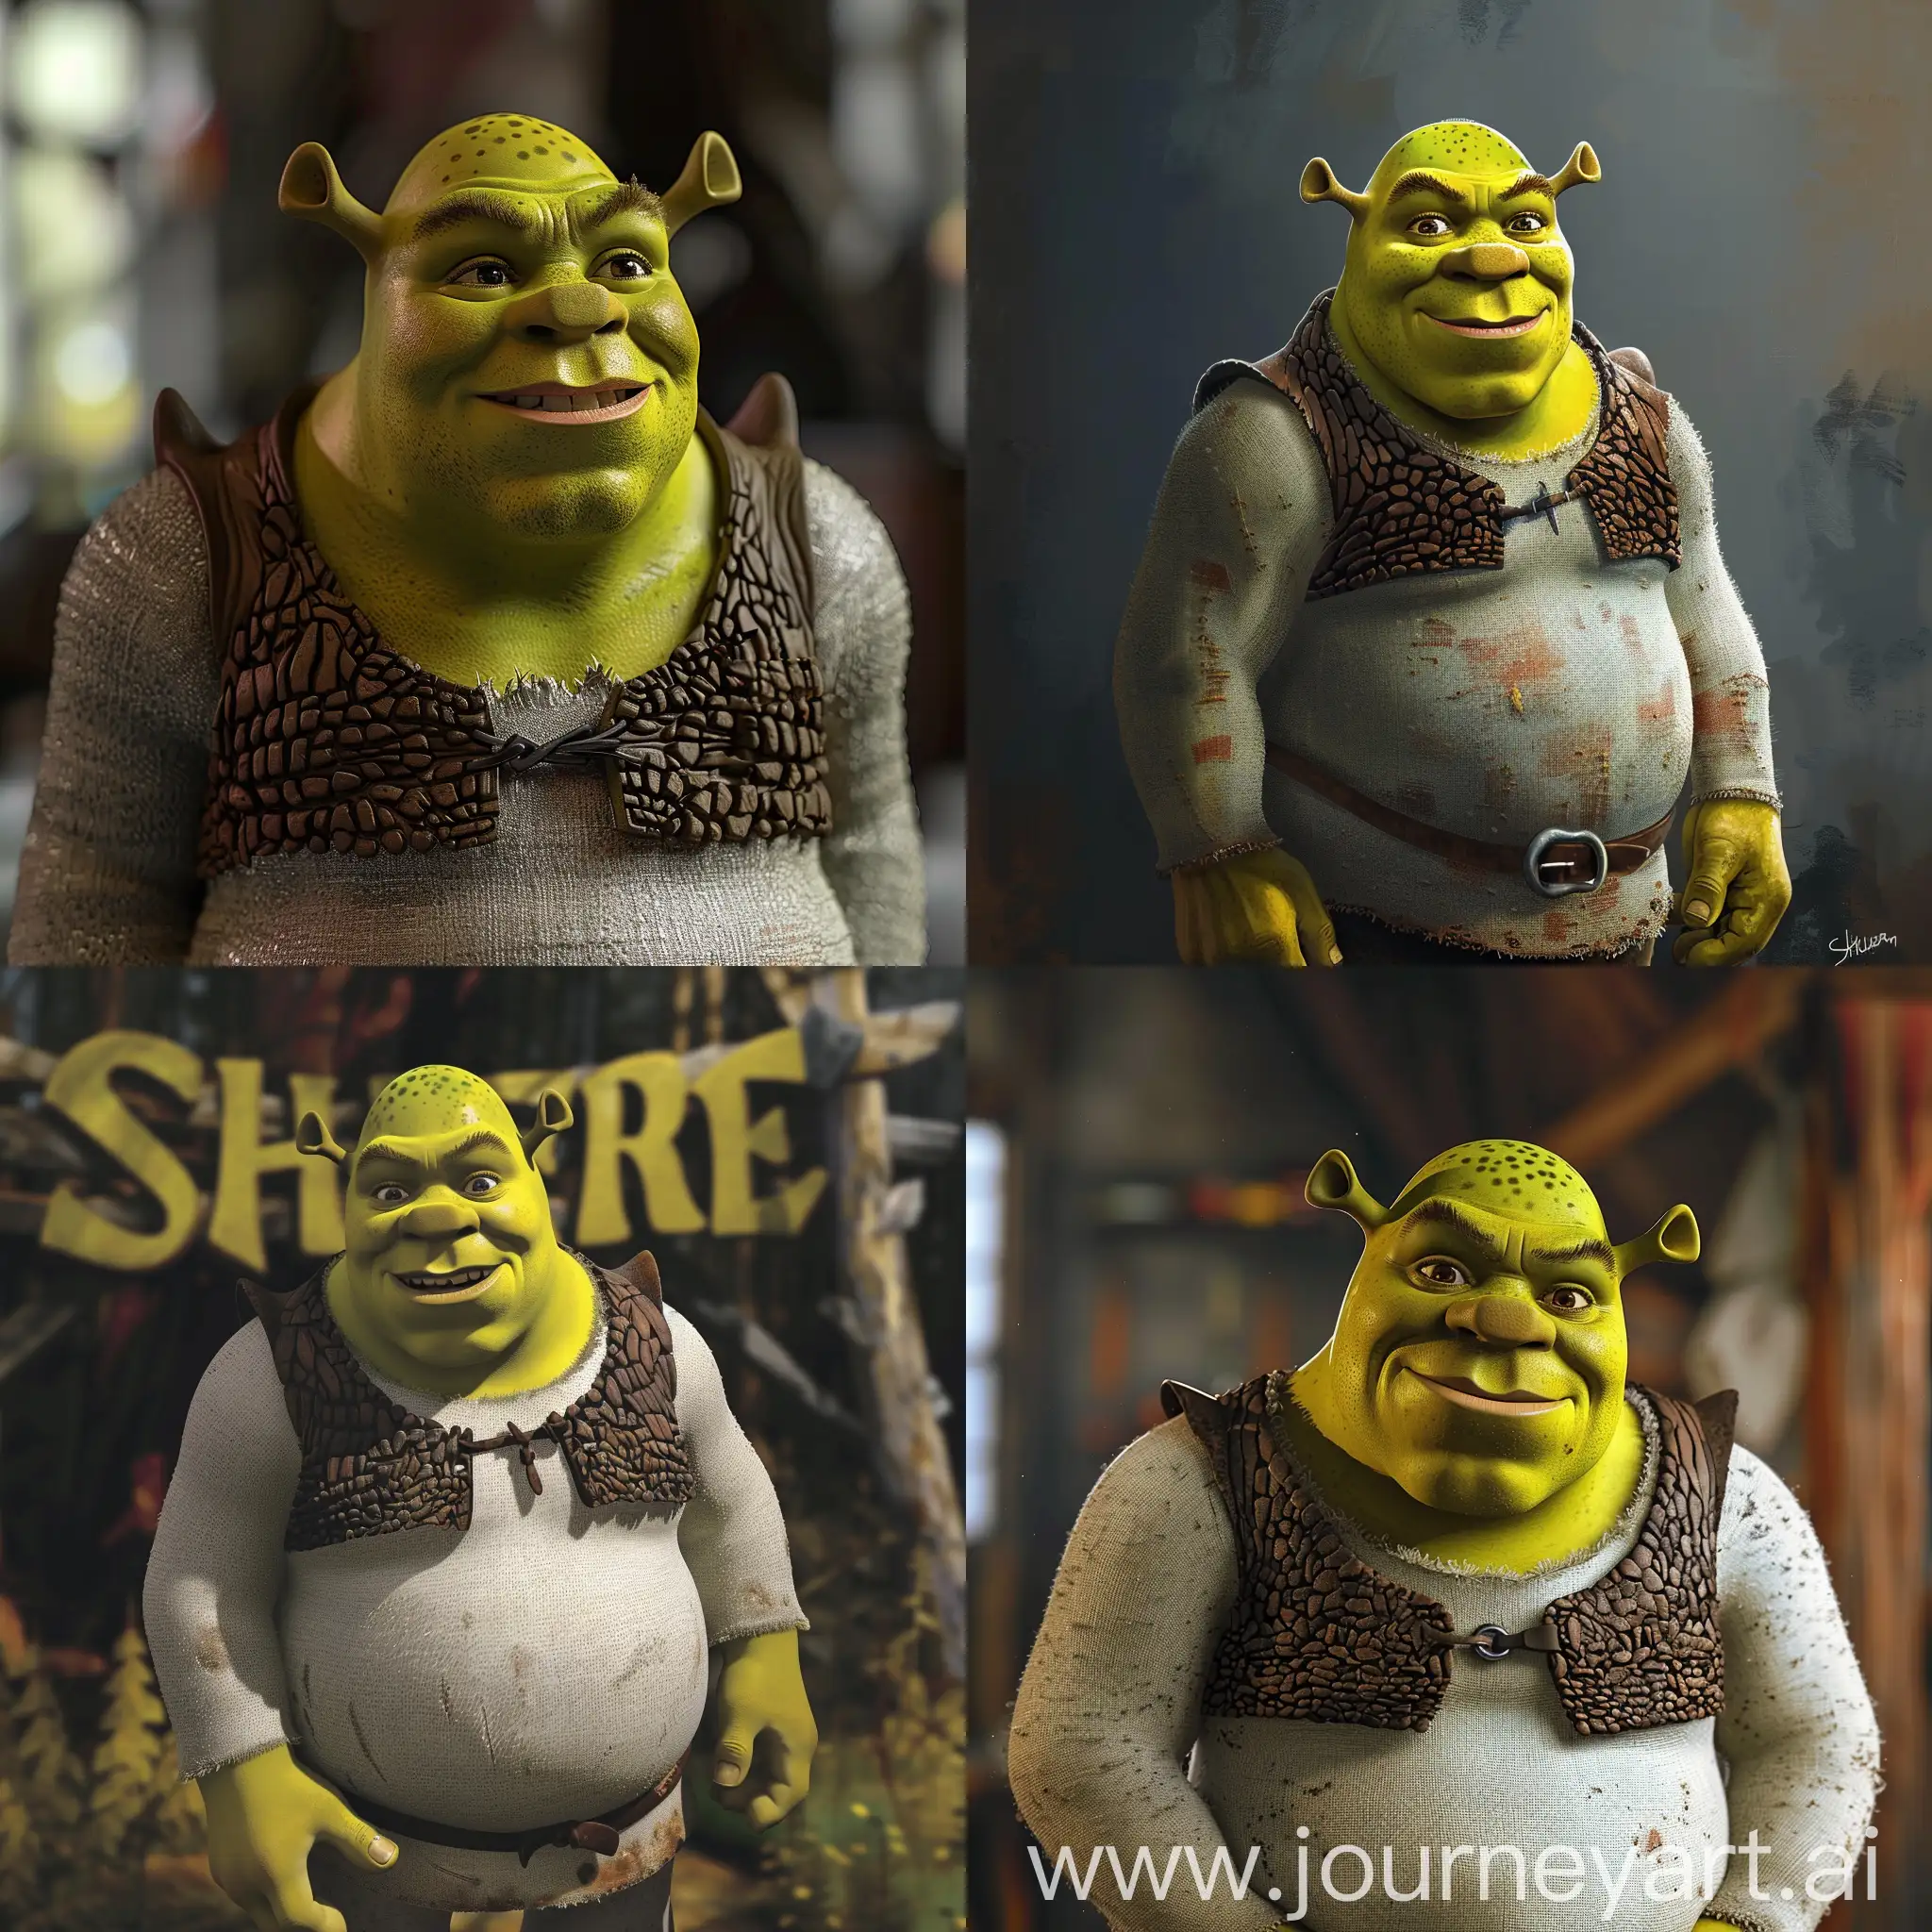 Sigma-Shrek-Digital-Art-Abstract-Representation-of-a-Colorful-Shrek-Character